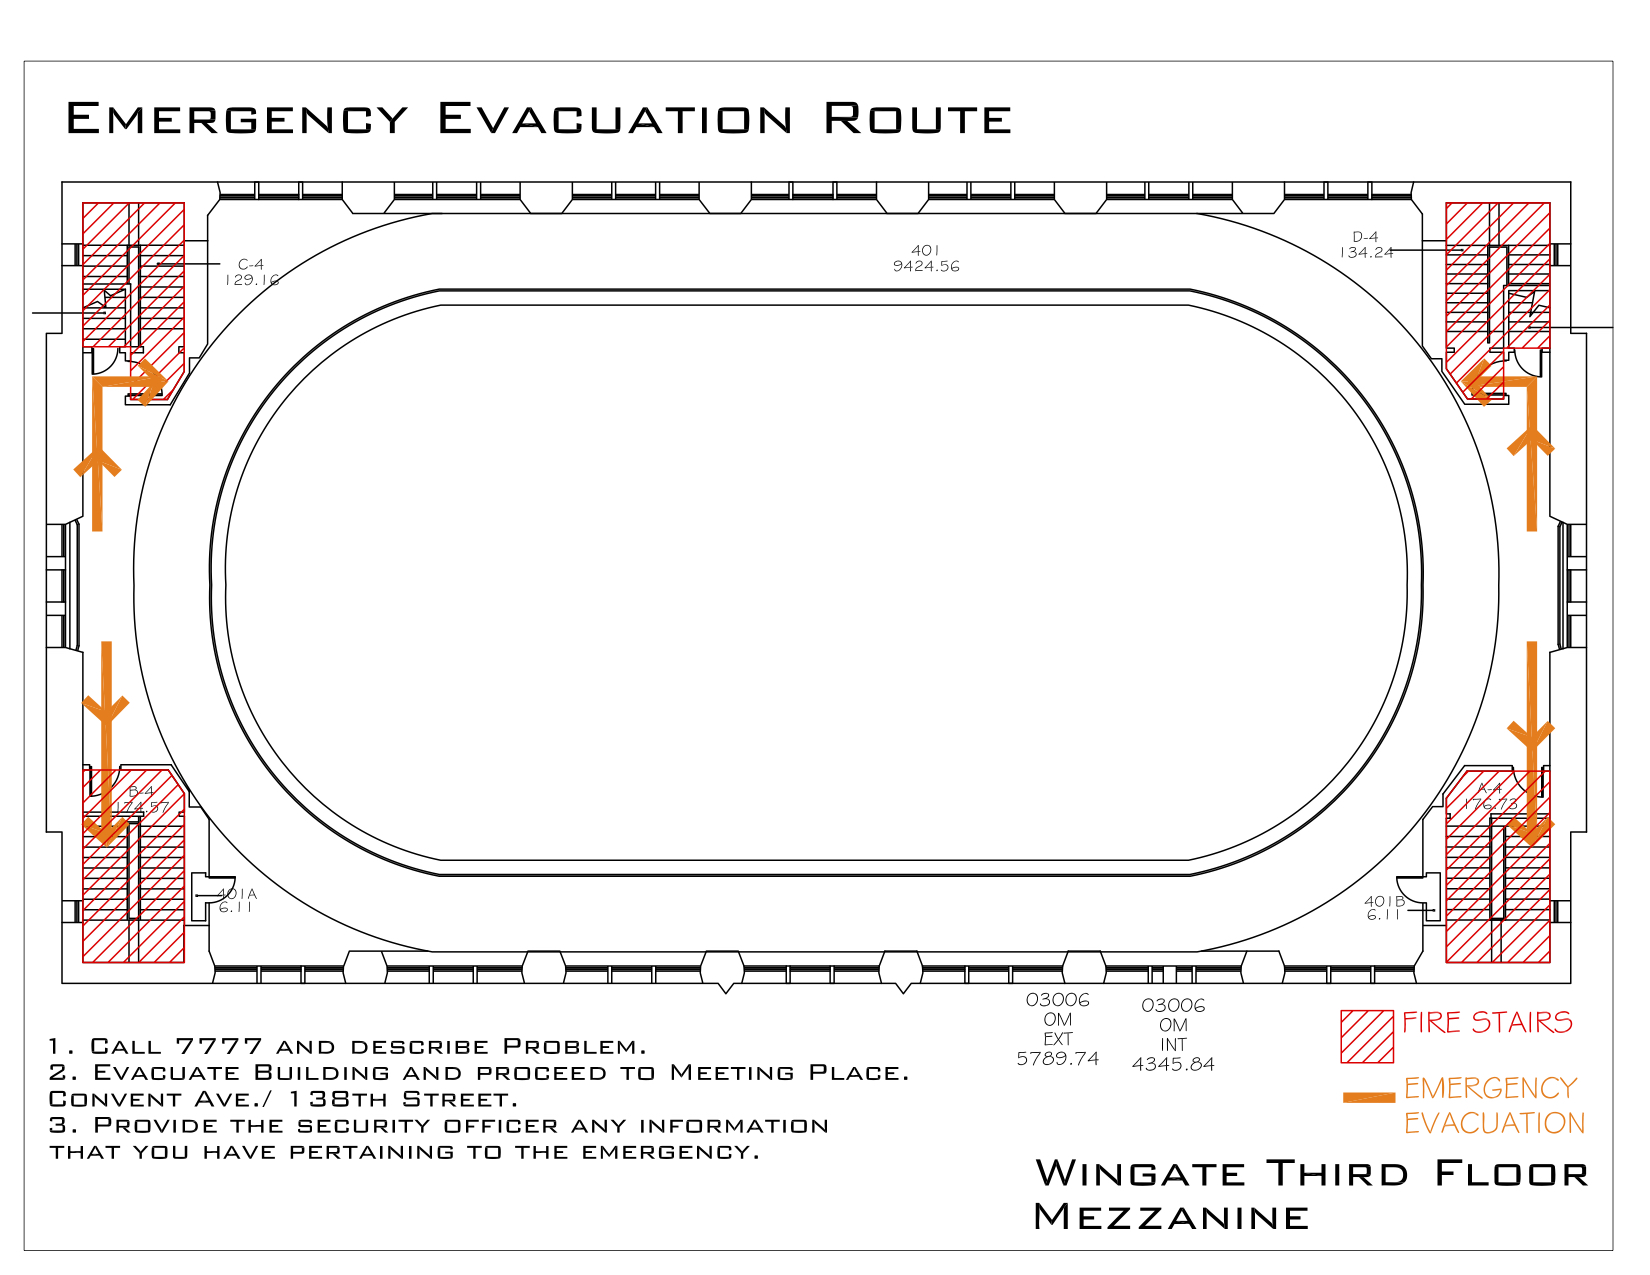 Wingate Hall - Evacuation Route 5